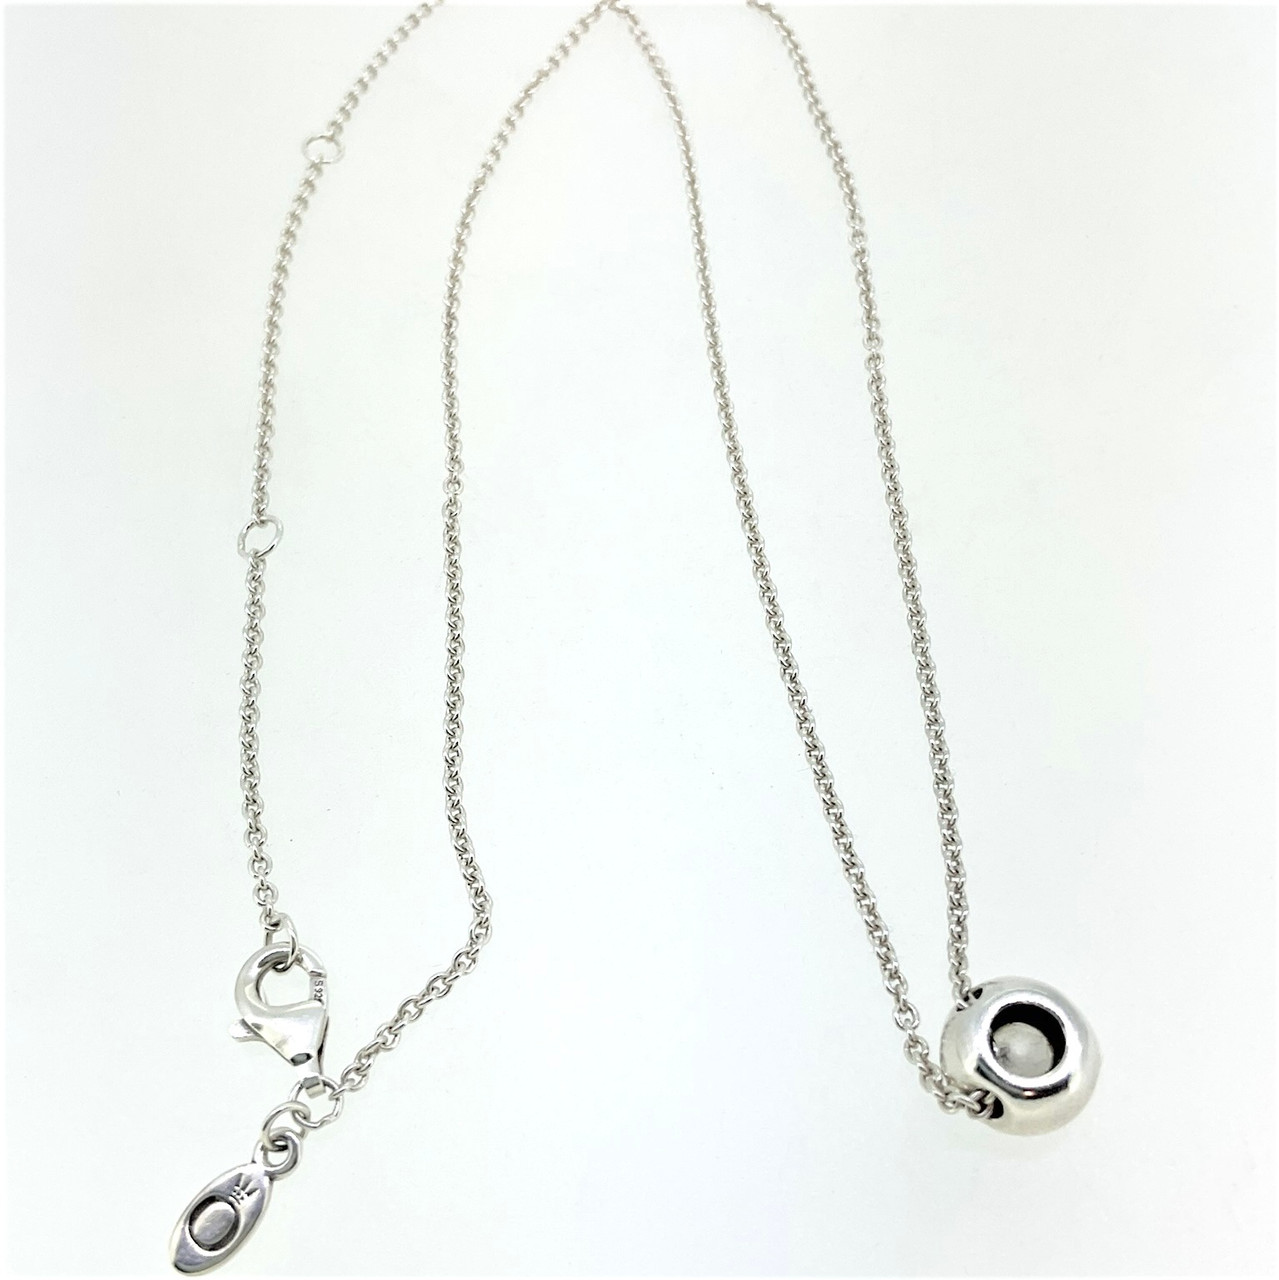 Pandora necklace and earrings set , family tree | eBay